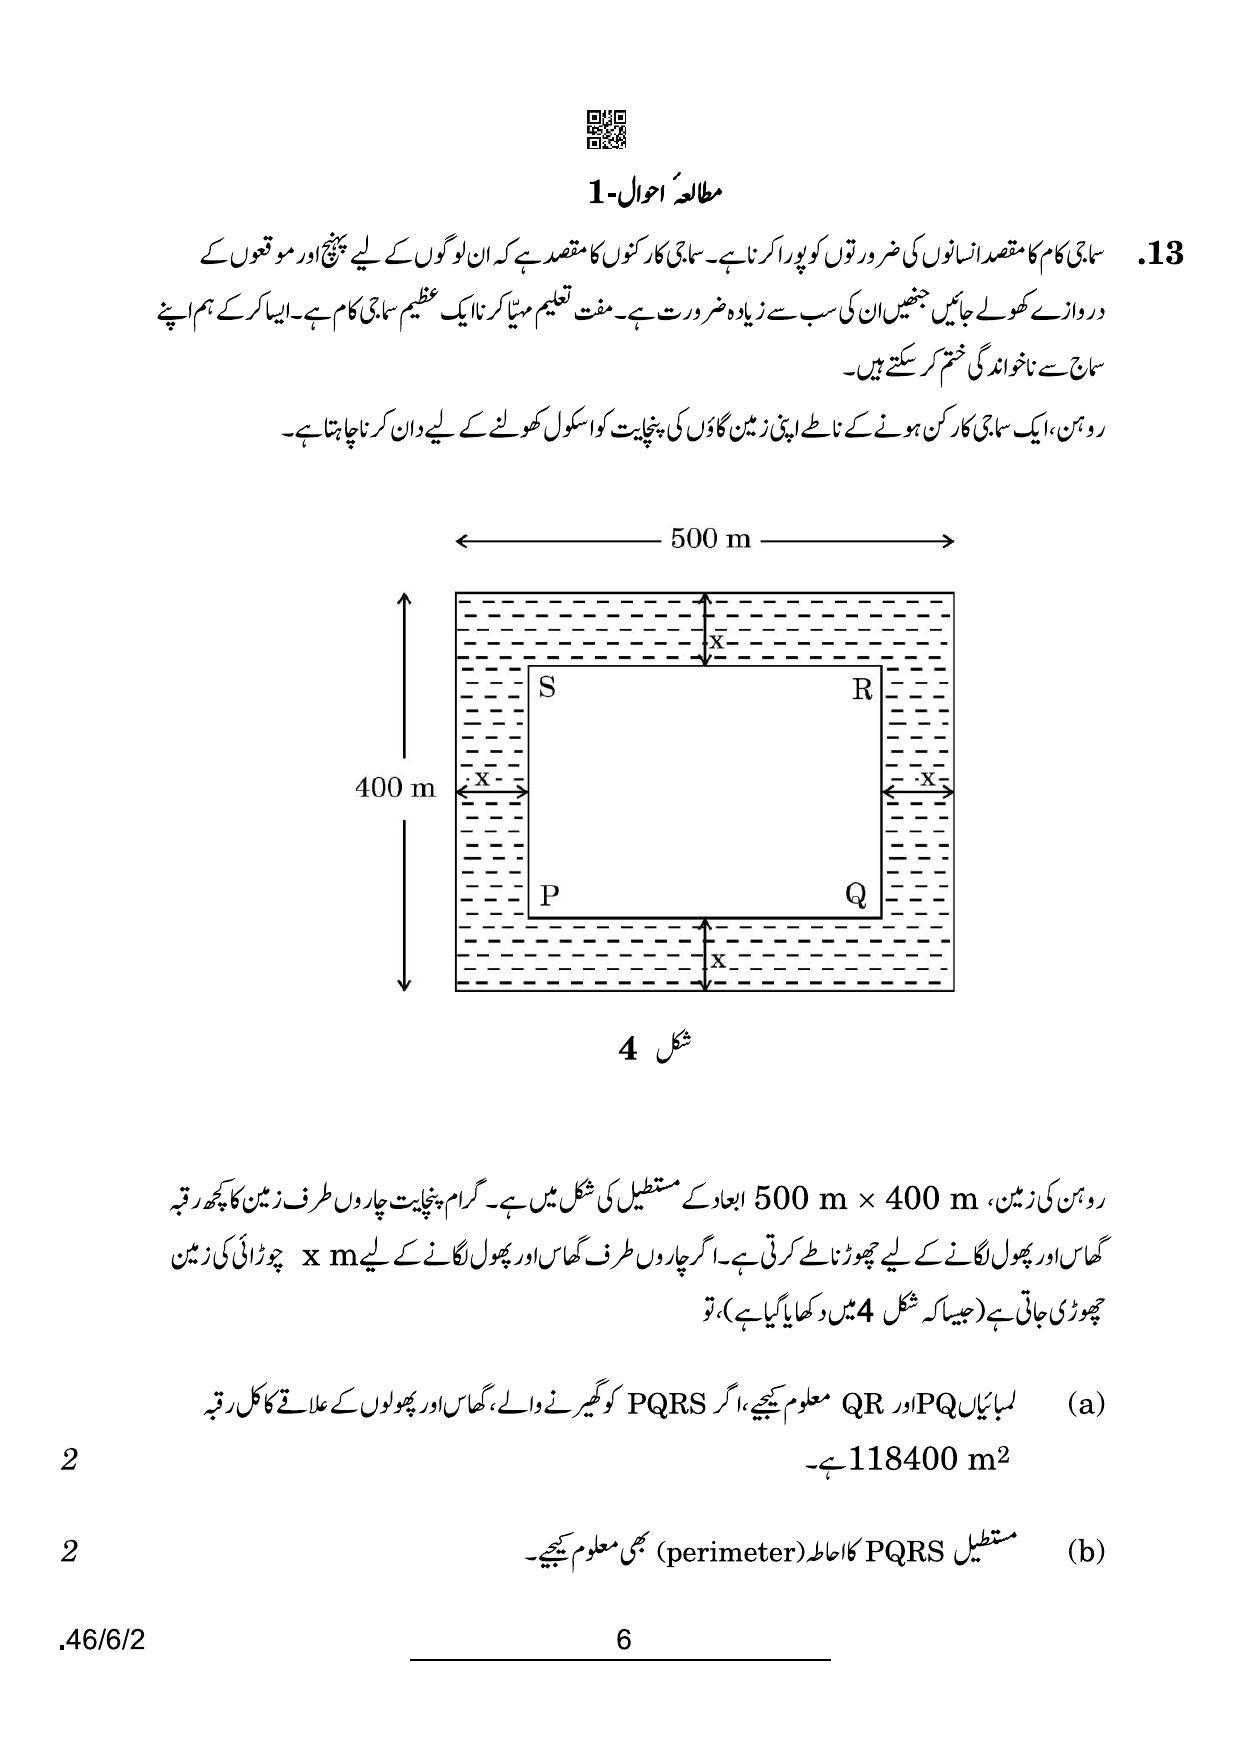 CBSE Class 10 46-6-2 Maths Standard Urdu 2022 Compartment Question Paper - Page 6